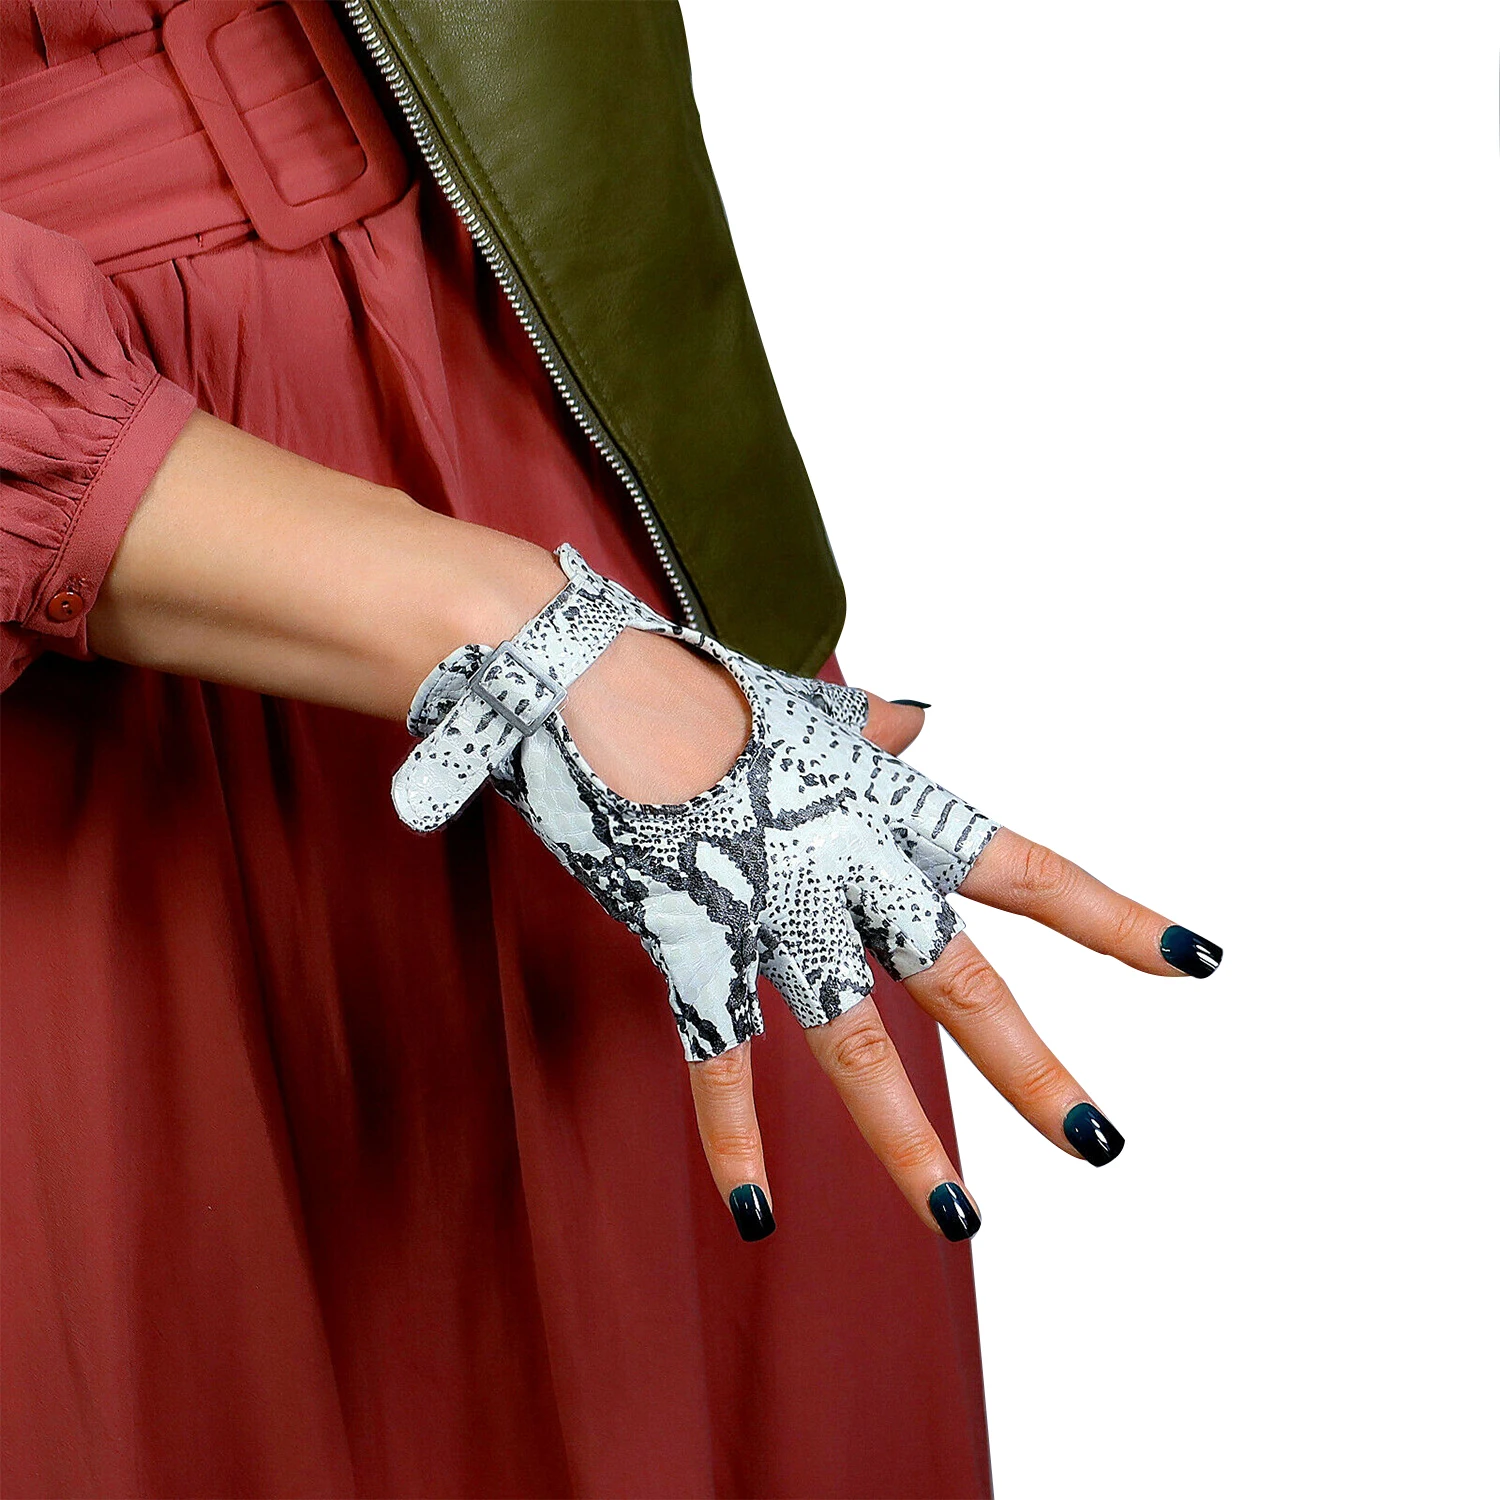 

Women's REAL LEATHER SNAKE Gloves Fingerless Half Finger Wrist Short Genuine Lambskin Buckle Closure Fashion Club Driving